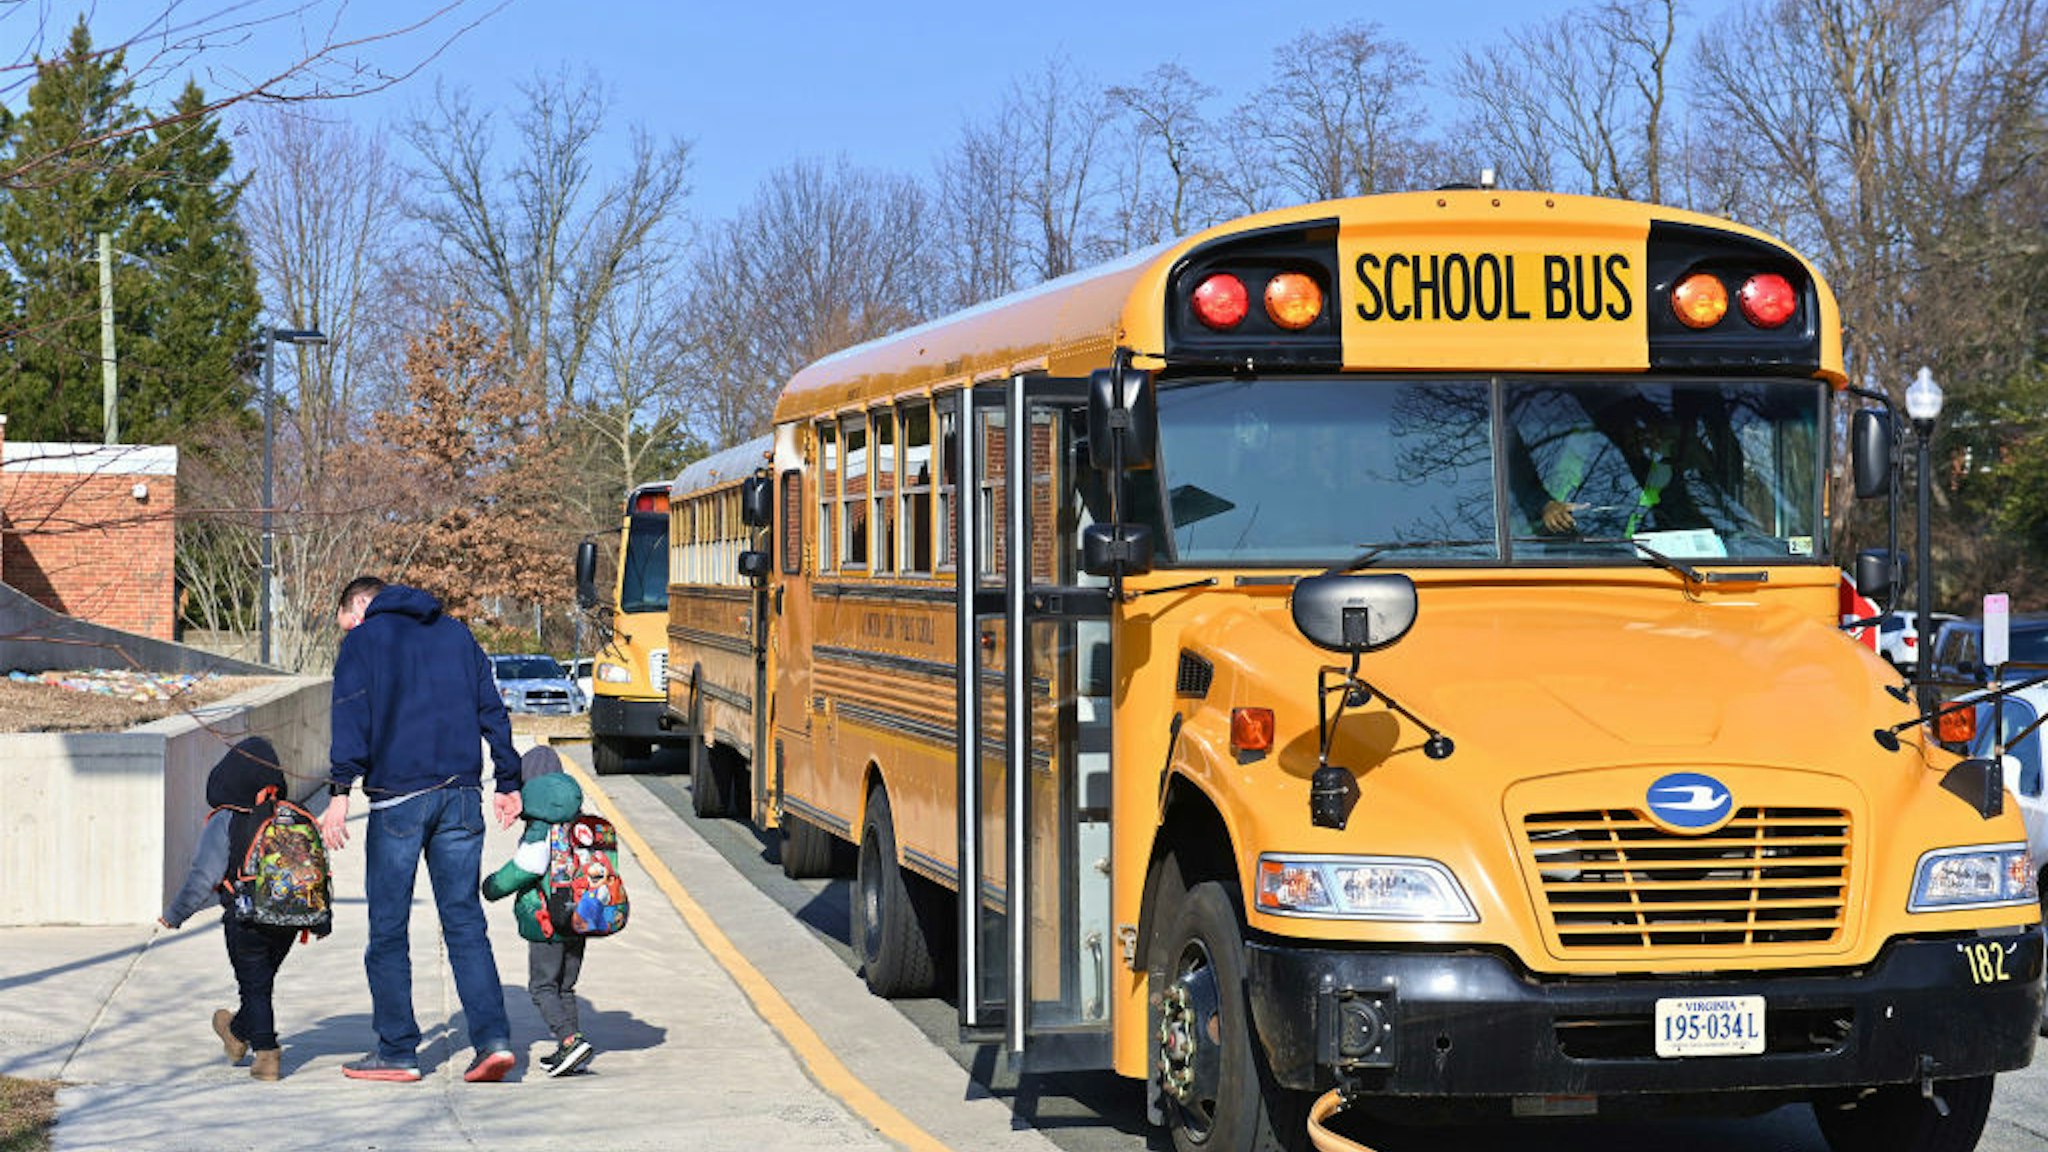 A school bus arrives at Ashlawn elementary school on March 4, 2021 in Arlington, VA.